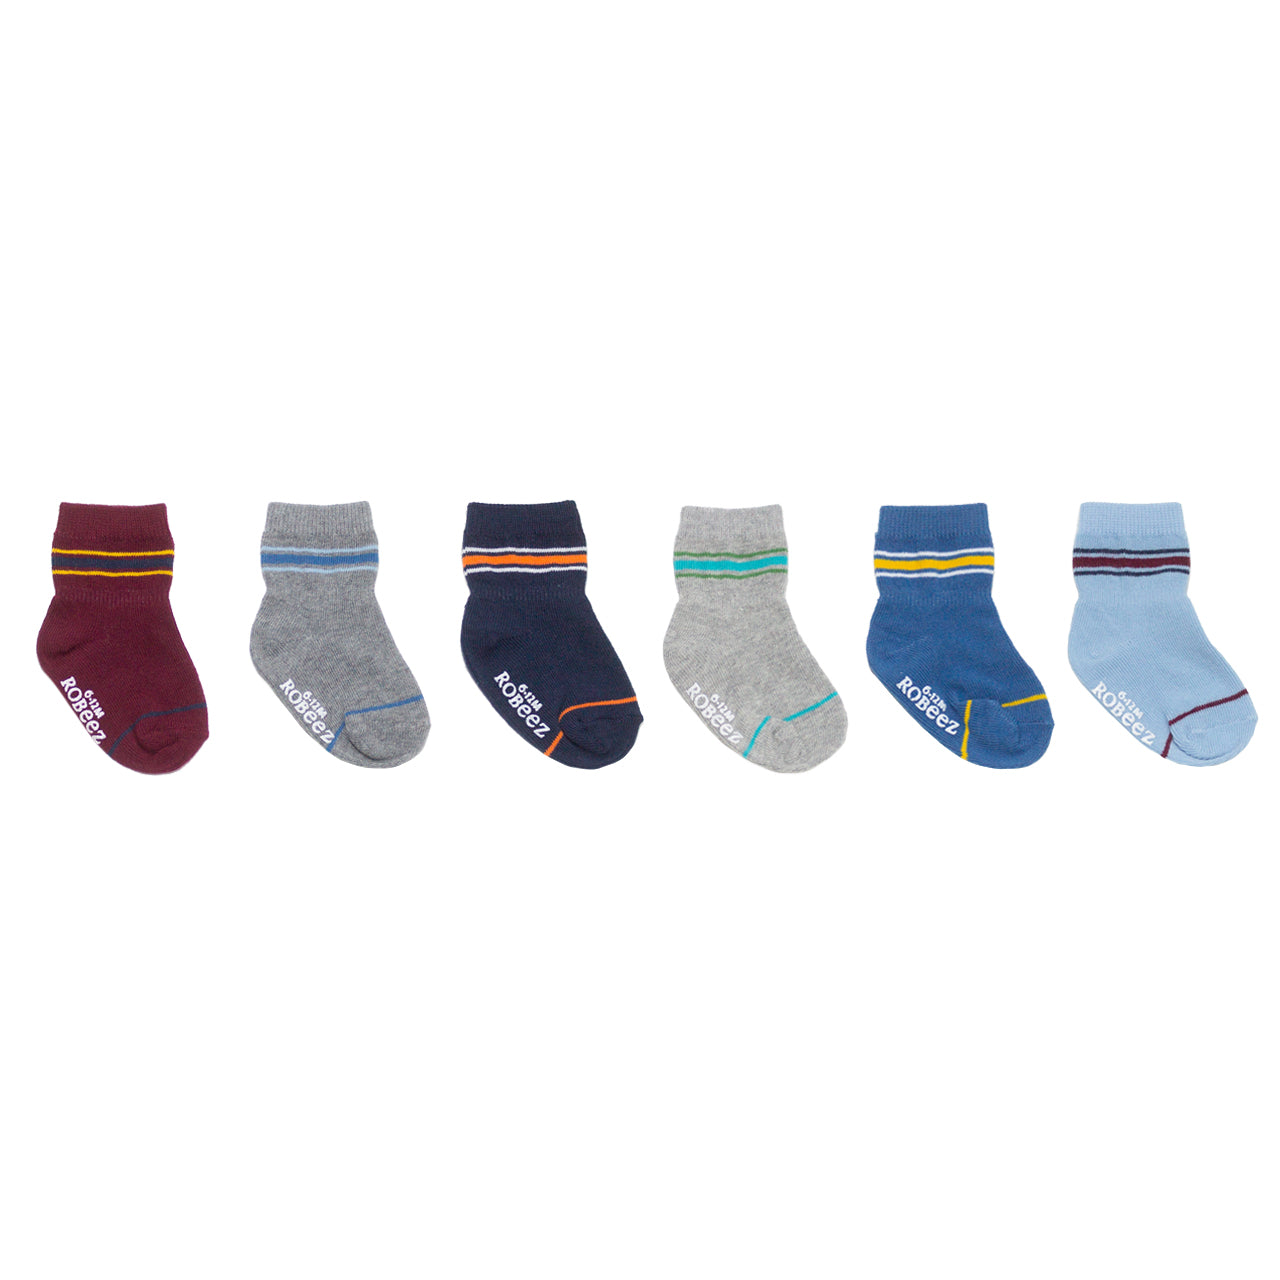 Robeez Infant Crew Socks 6-Pack / Boy - Varsity Stripes